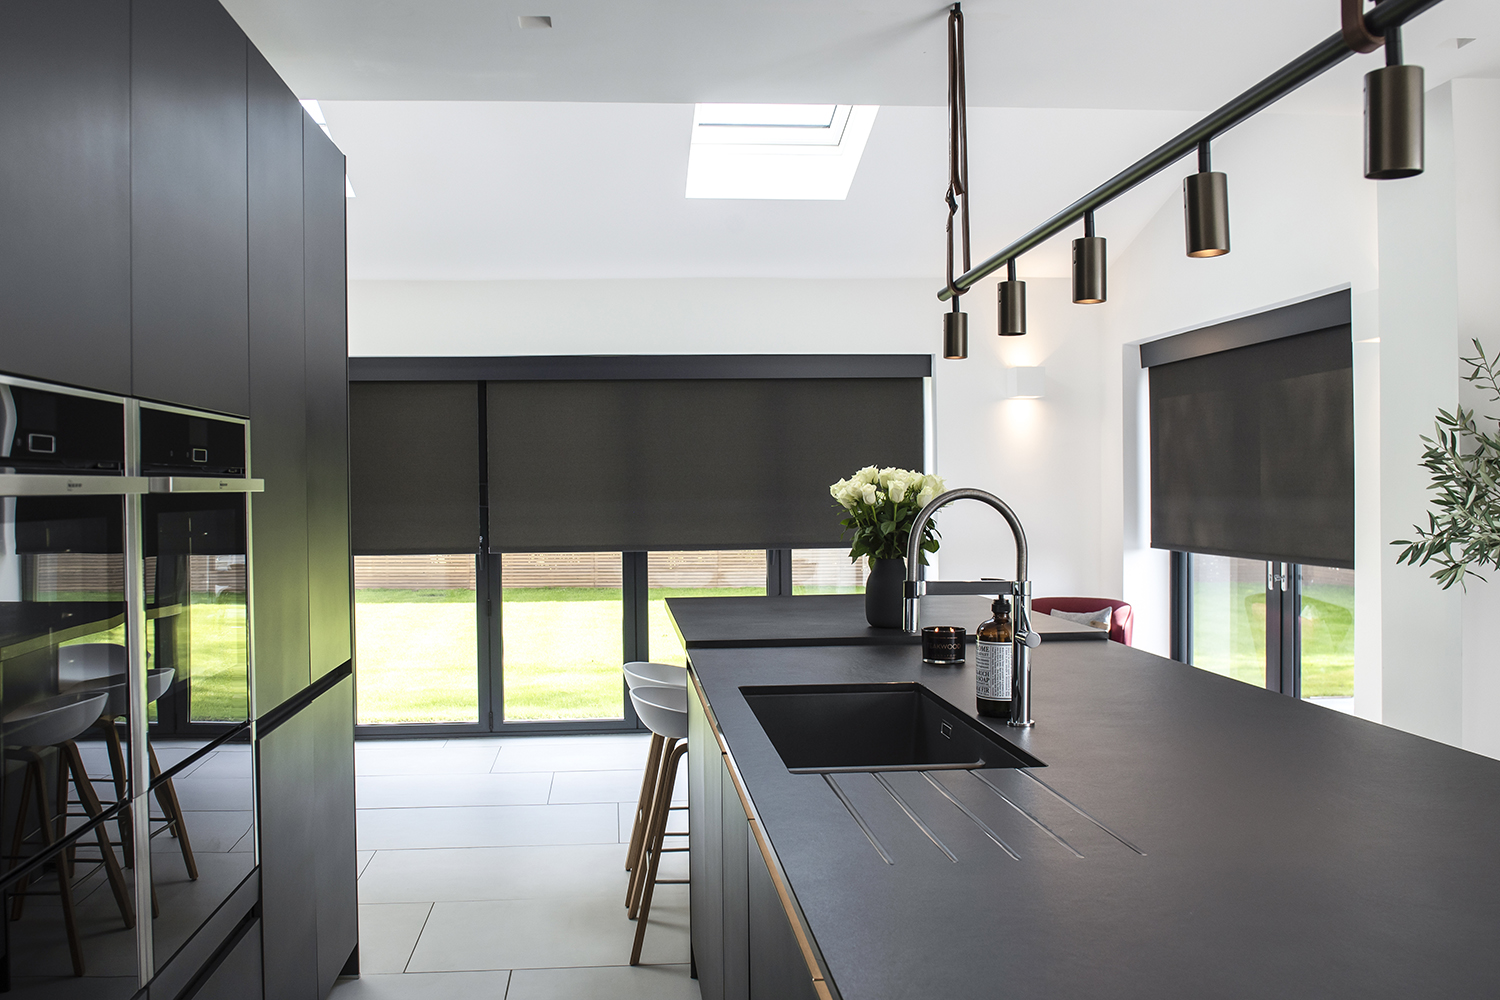 Dream Range Window Blinds Motorisation, Smart Home, Kitchen with Motorised Roller Blinds, Decorquip.